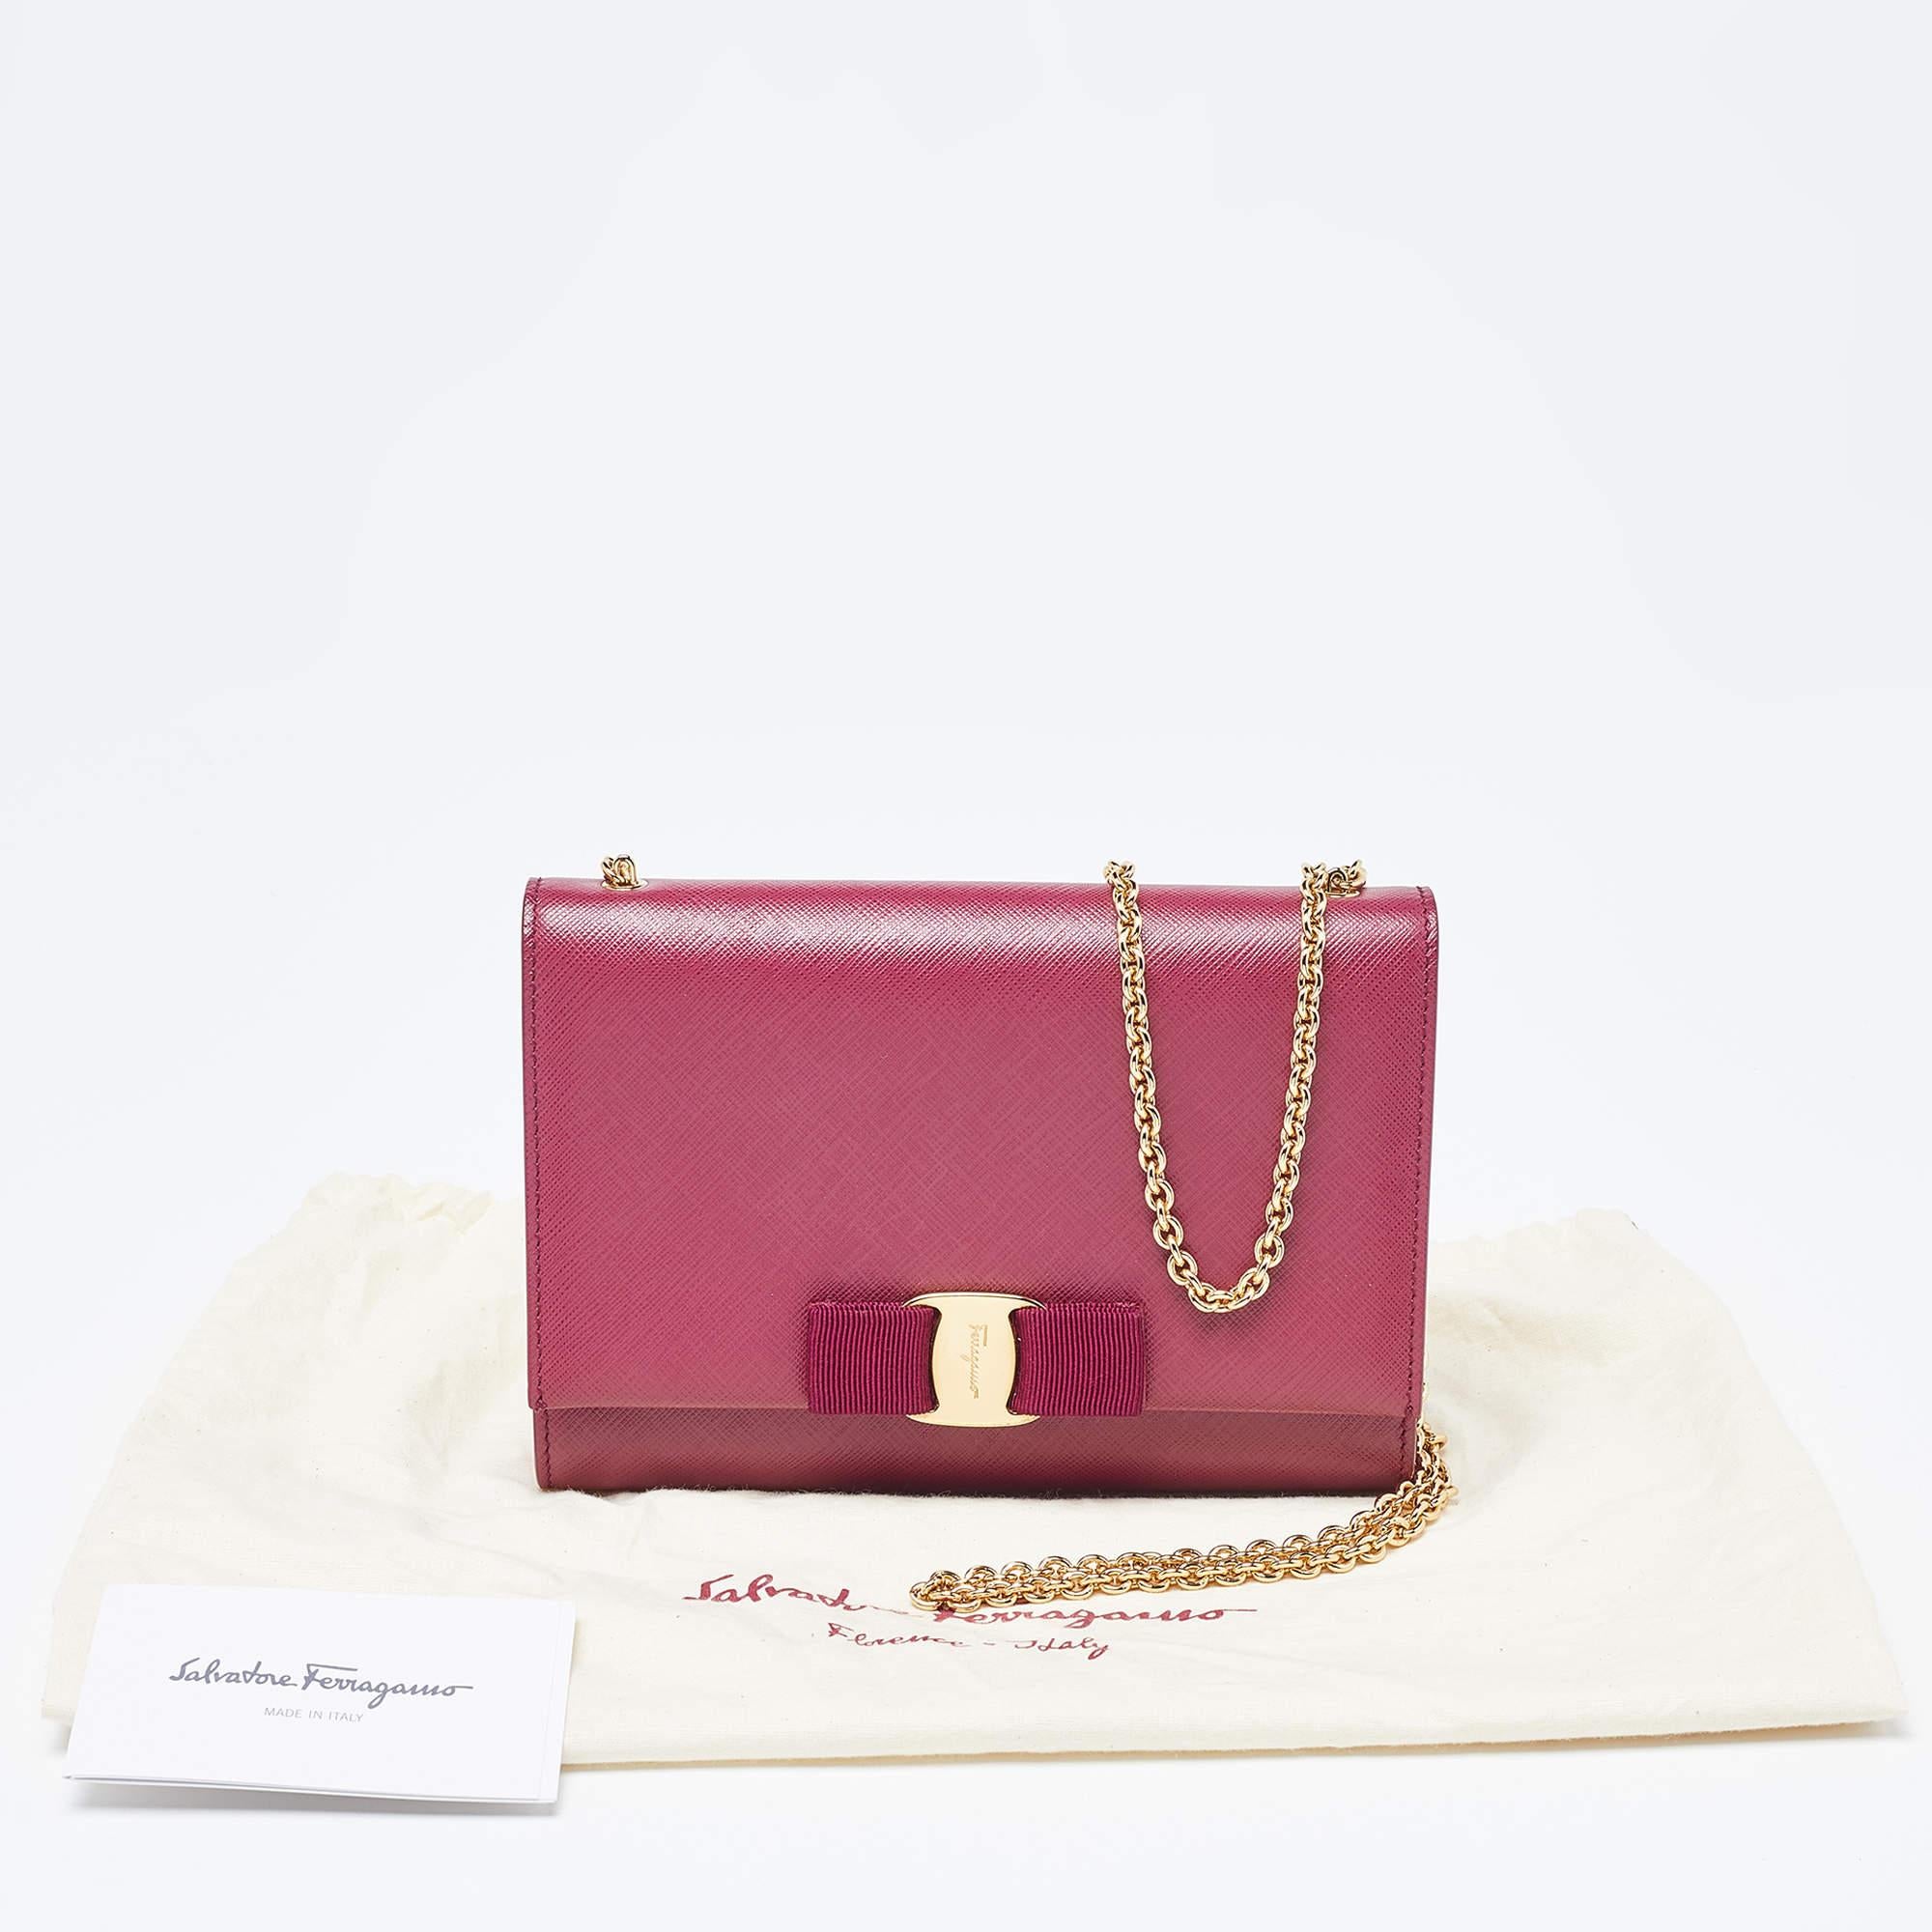 Salvatore Ferragamo Dark Pink Leather Vara Bow Chain Bag In Excellent Condition For Sale In Dubai, Al Qouz 2